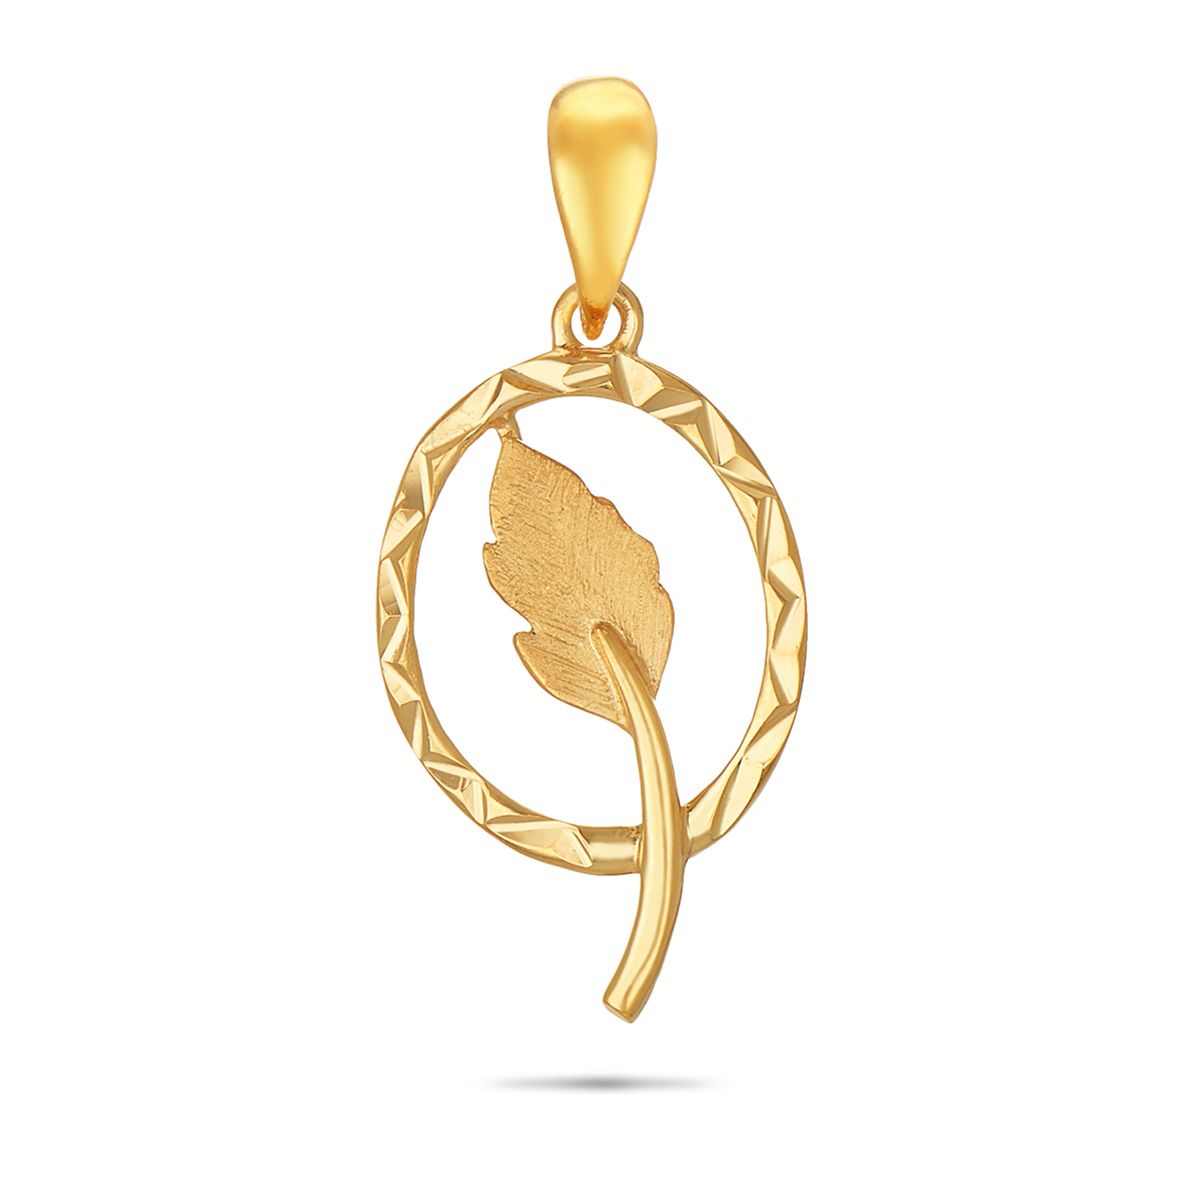 Buy Gold Necklaces & Pendants for Women by Iski Uski Online | Ajio.com